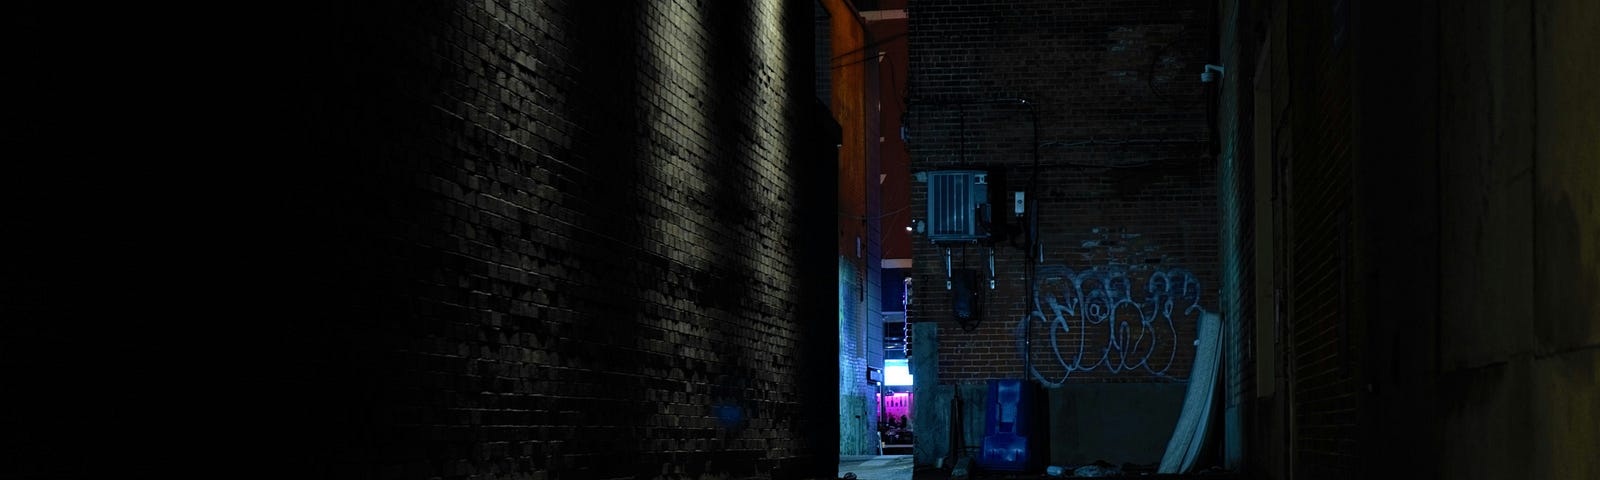 dark alley with graffiti